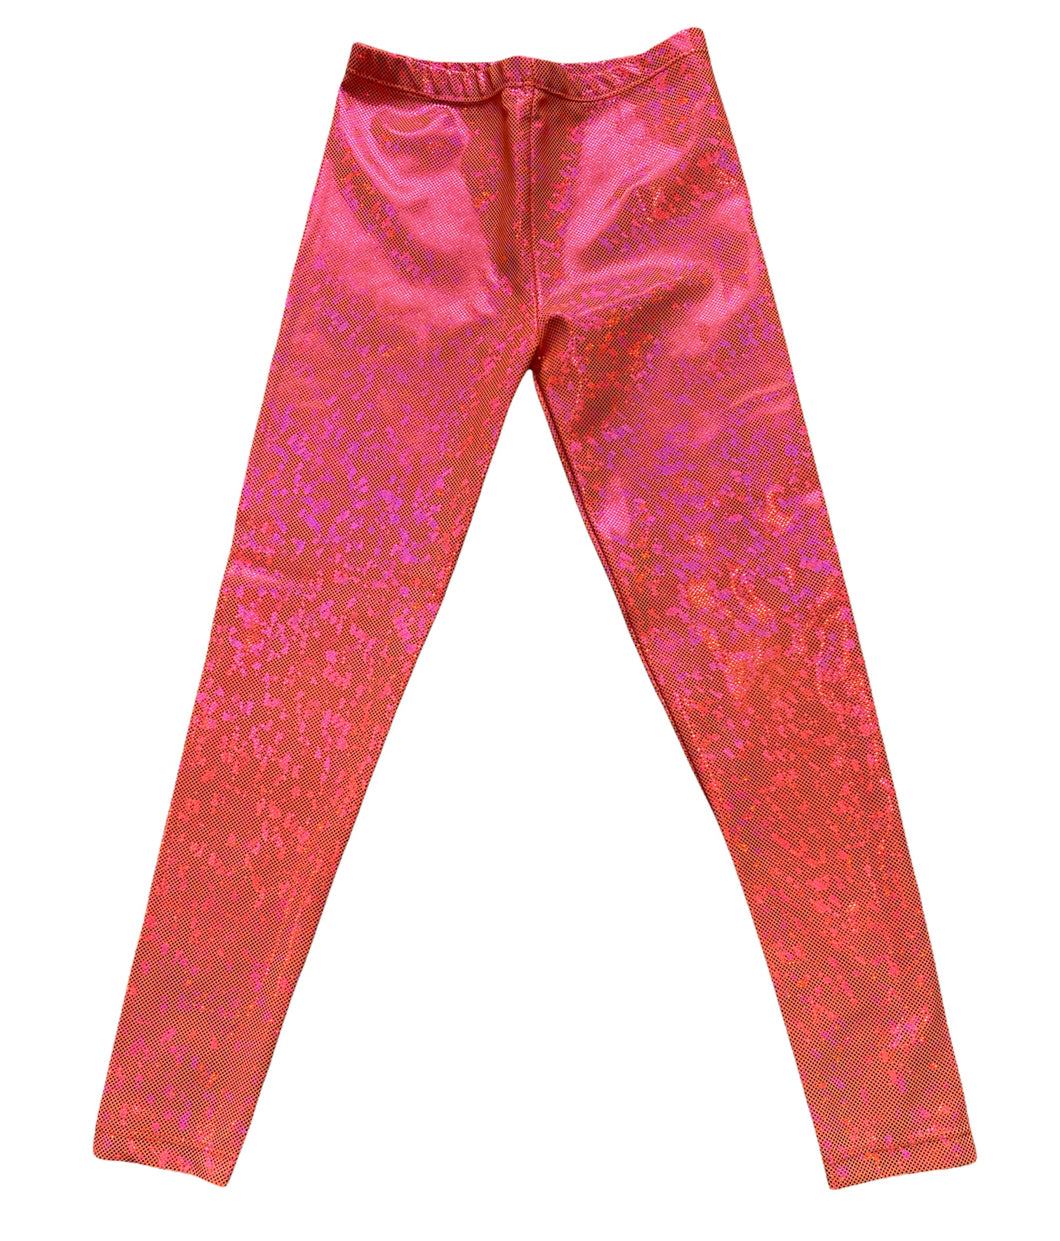 Hope Jeans girls pink sparkle high shine leggings 10